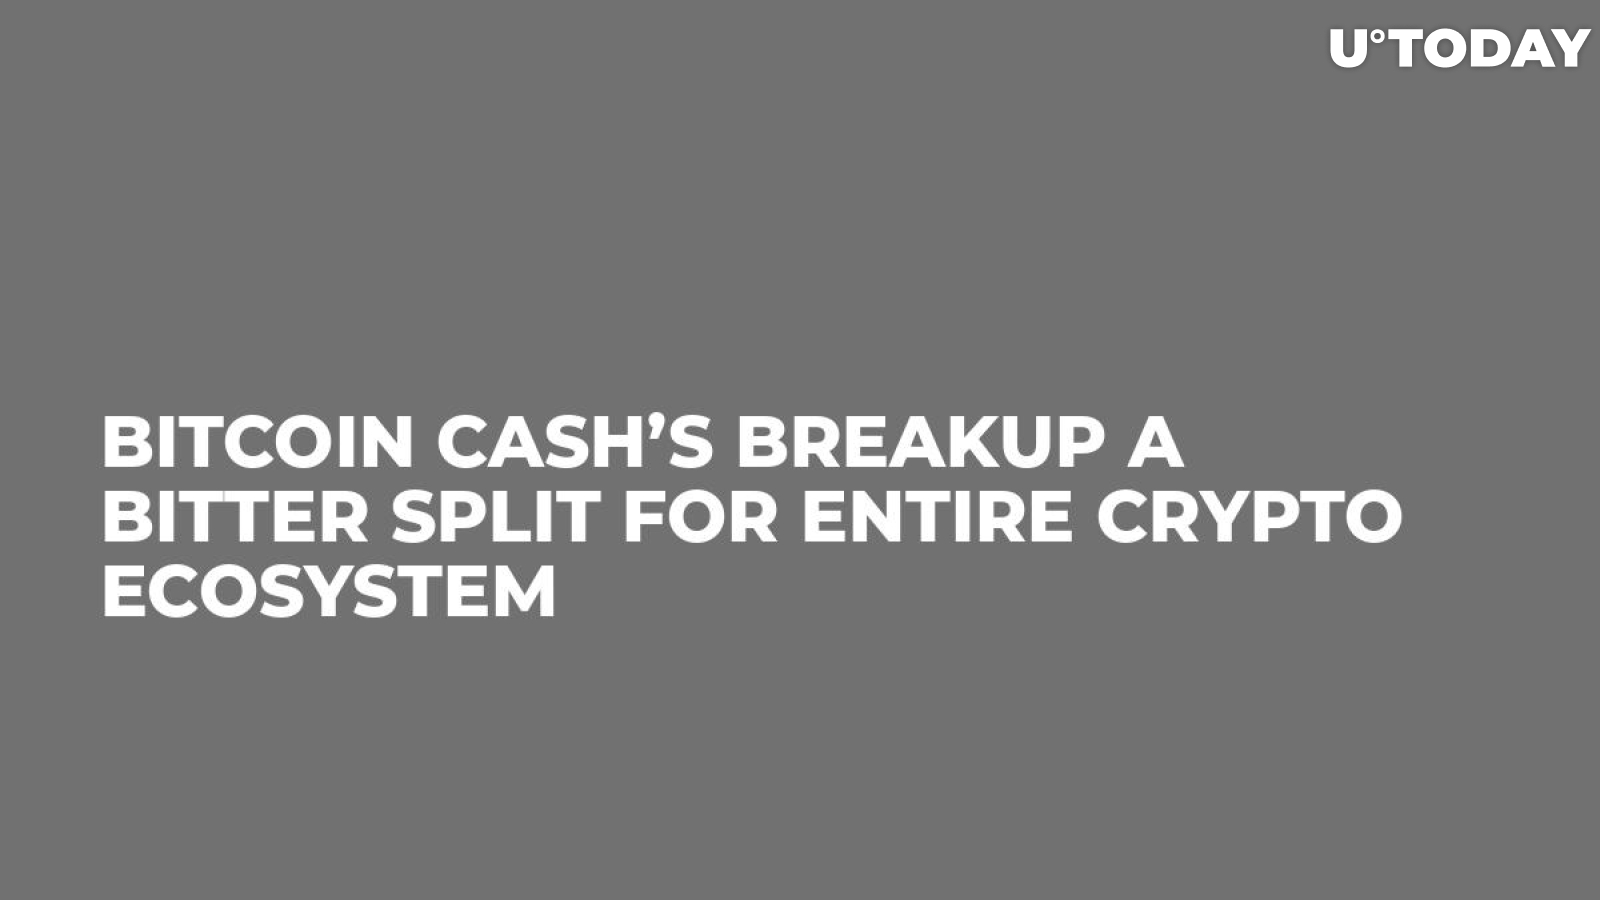 Bitcoin Cash’s Breakup a Bitter Split for Entire Crypto Ecosystem